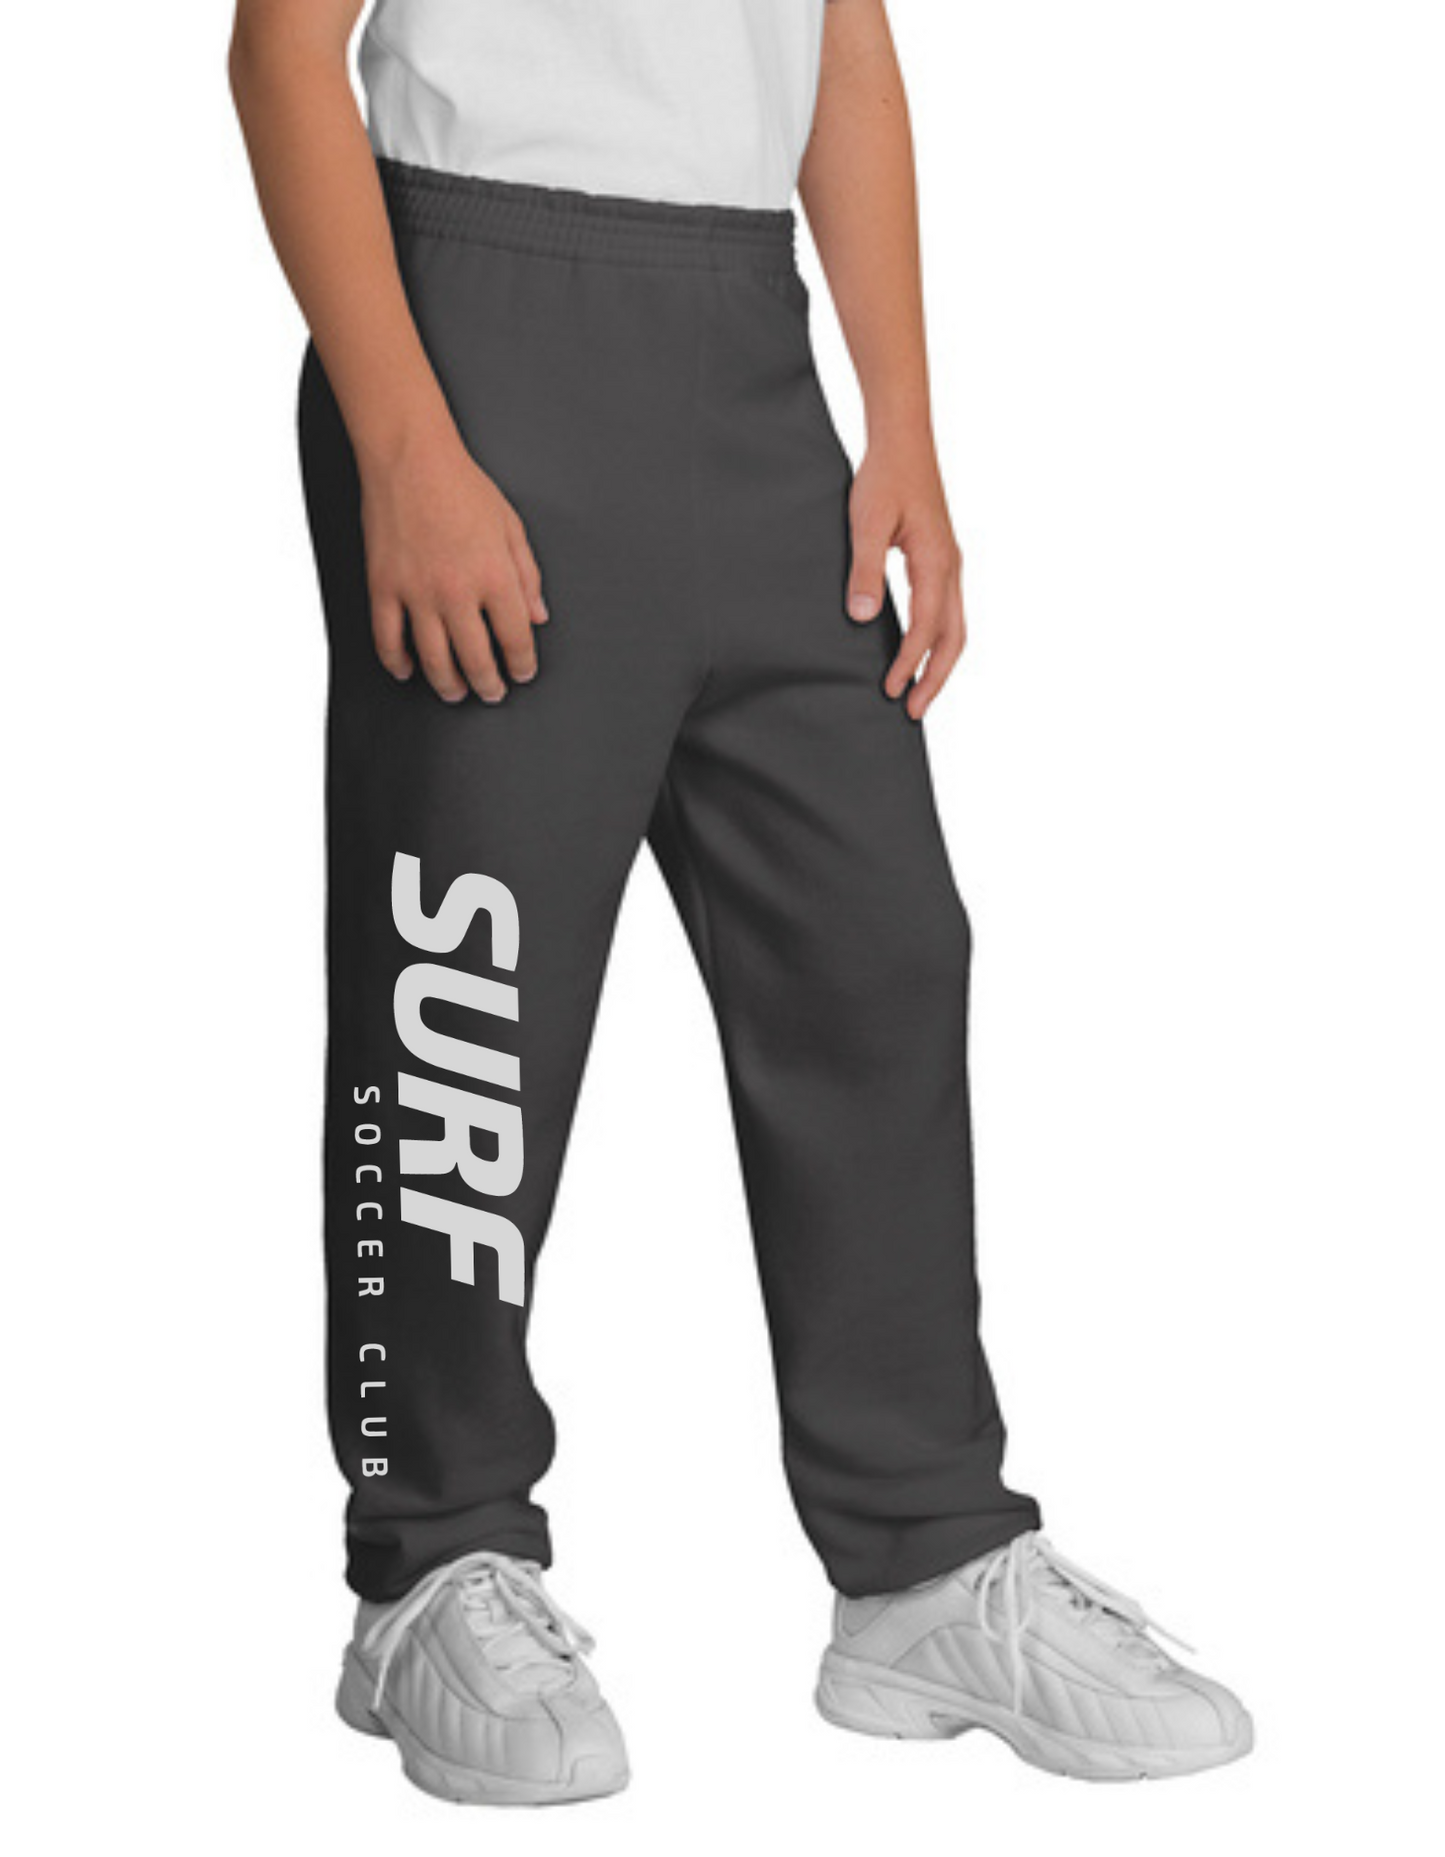 SideLine Youth Sweatpants